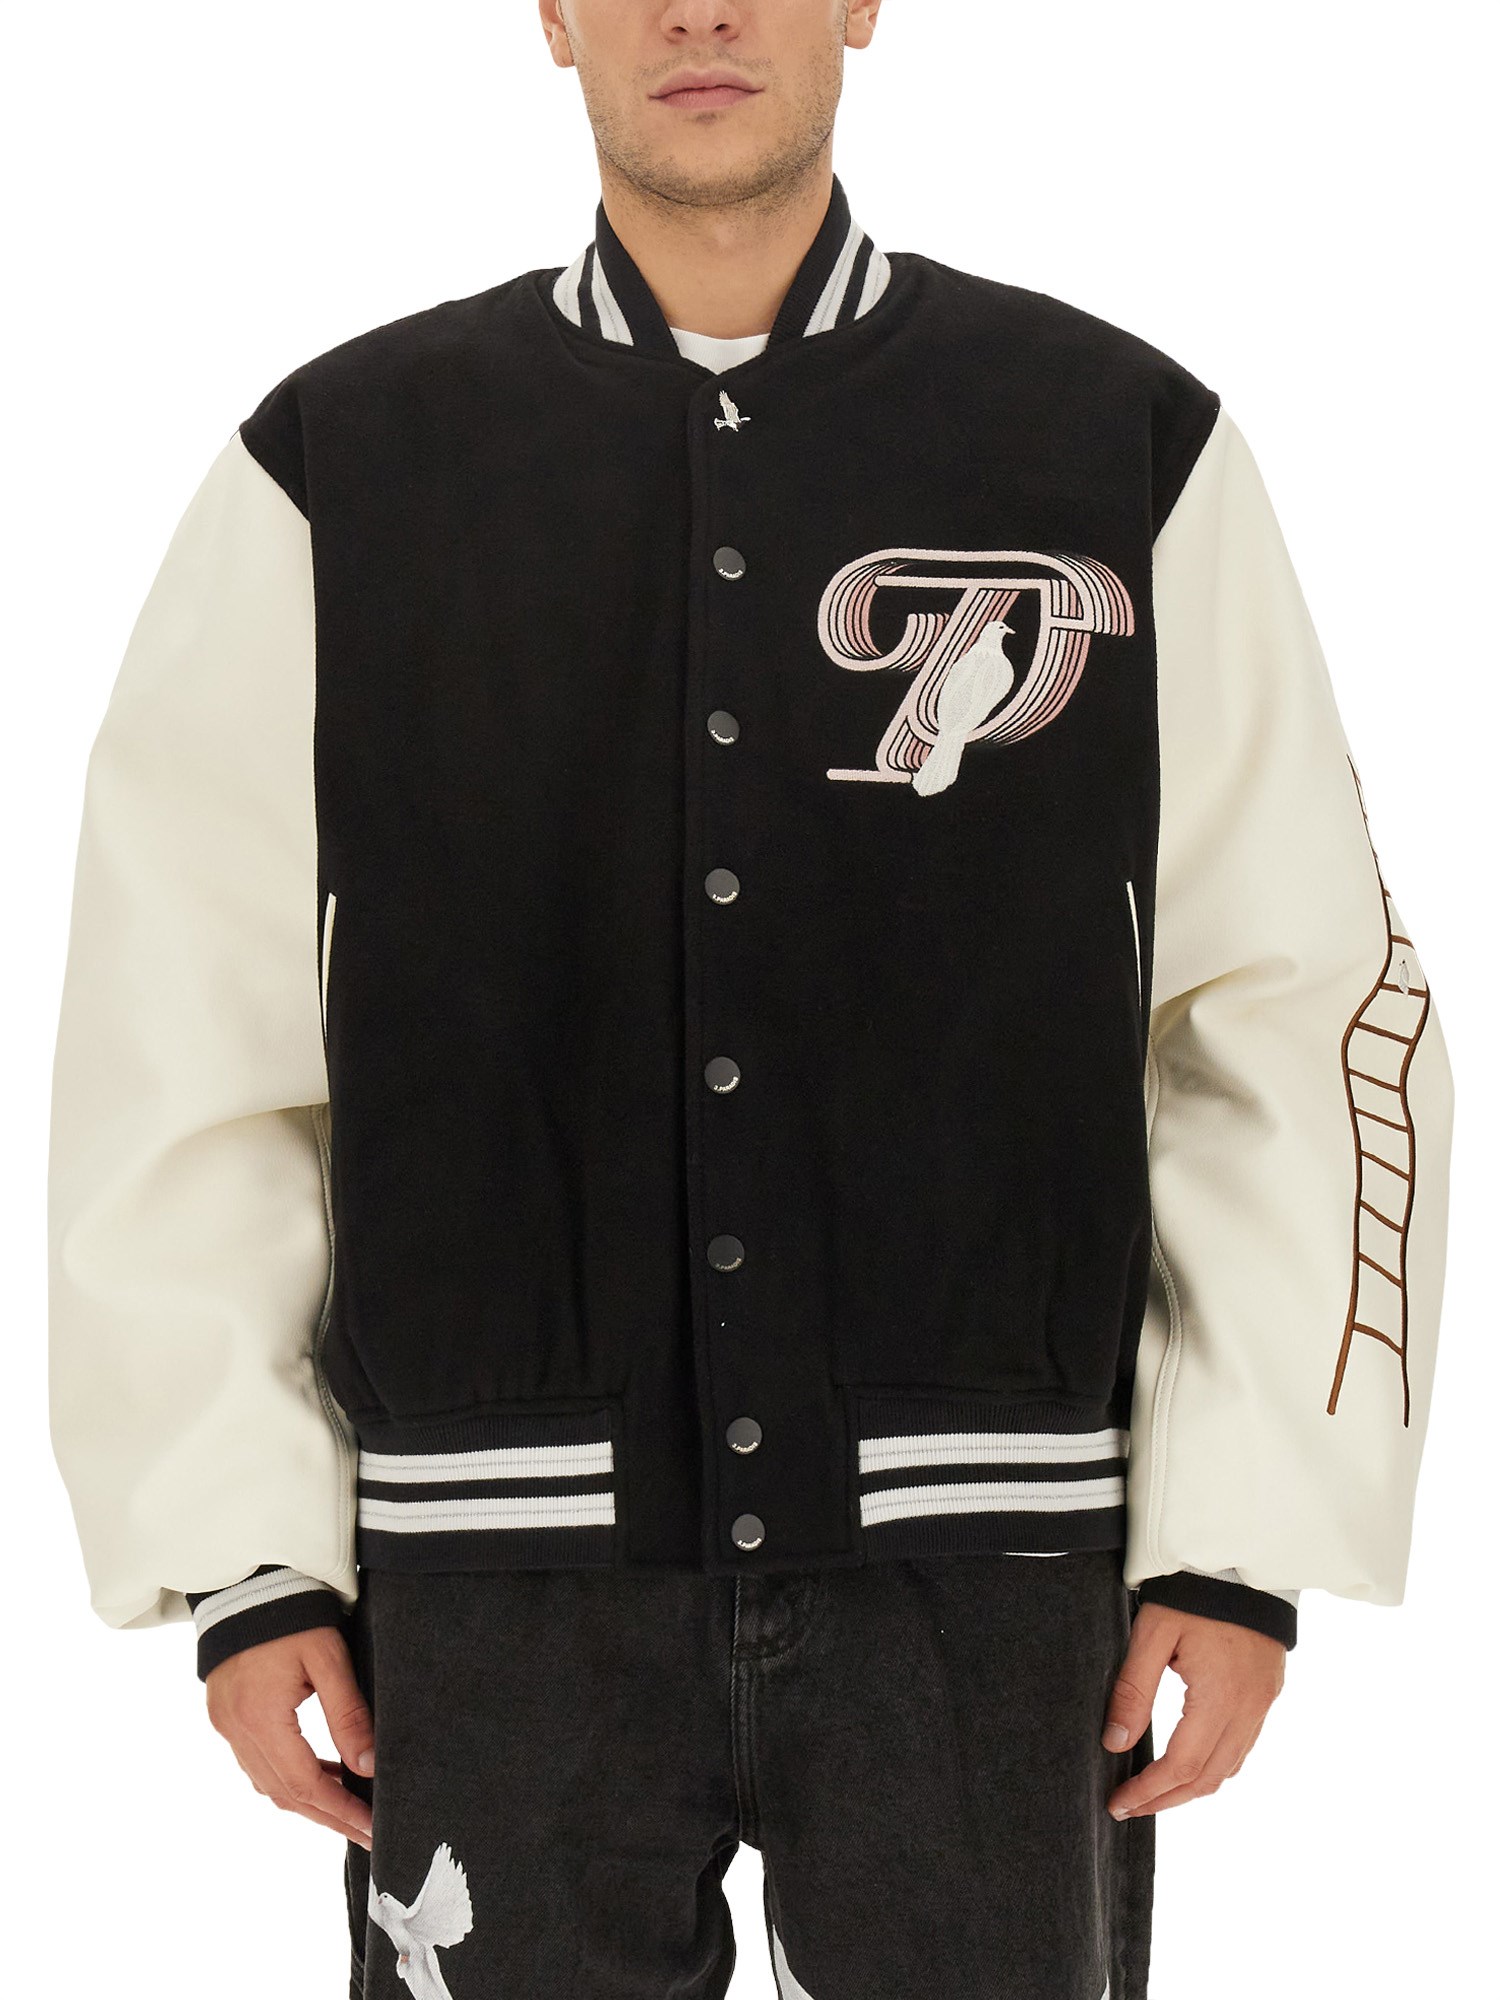 3.paradis 3.paradis jacket with logo